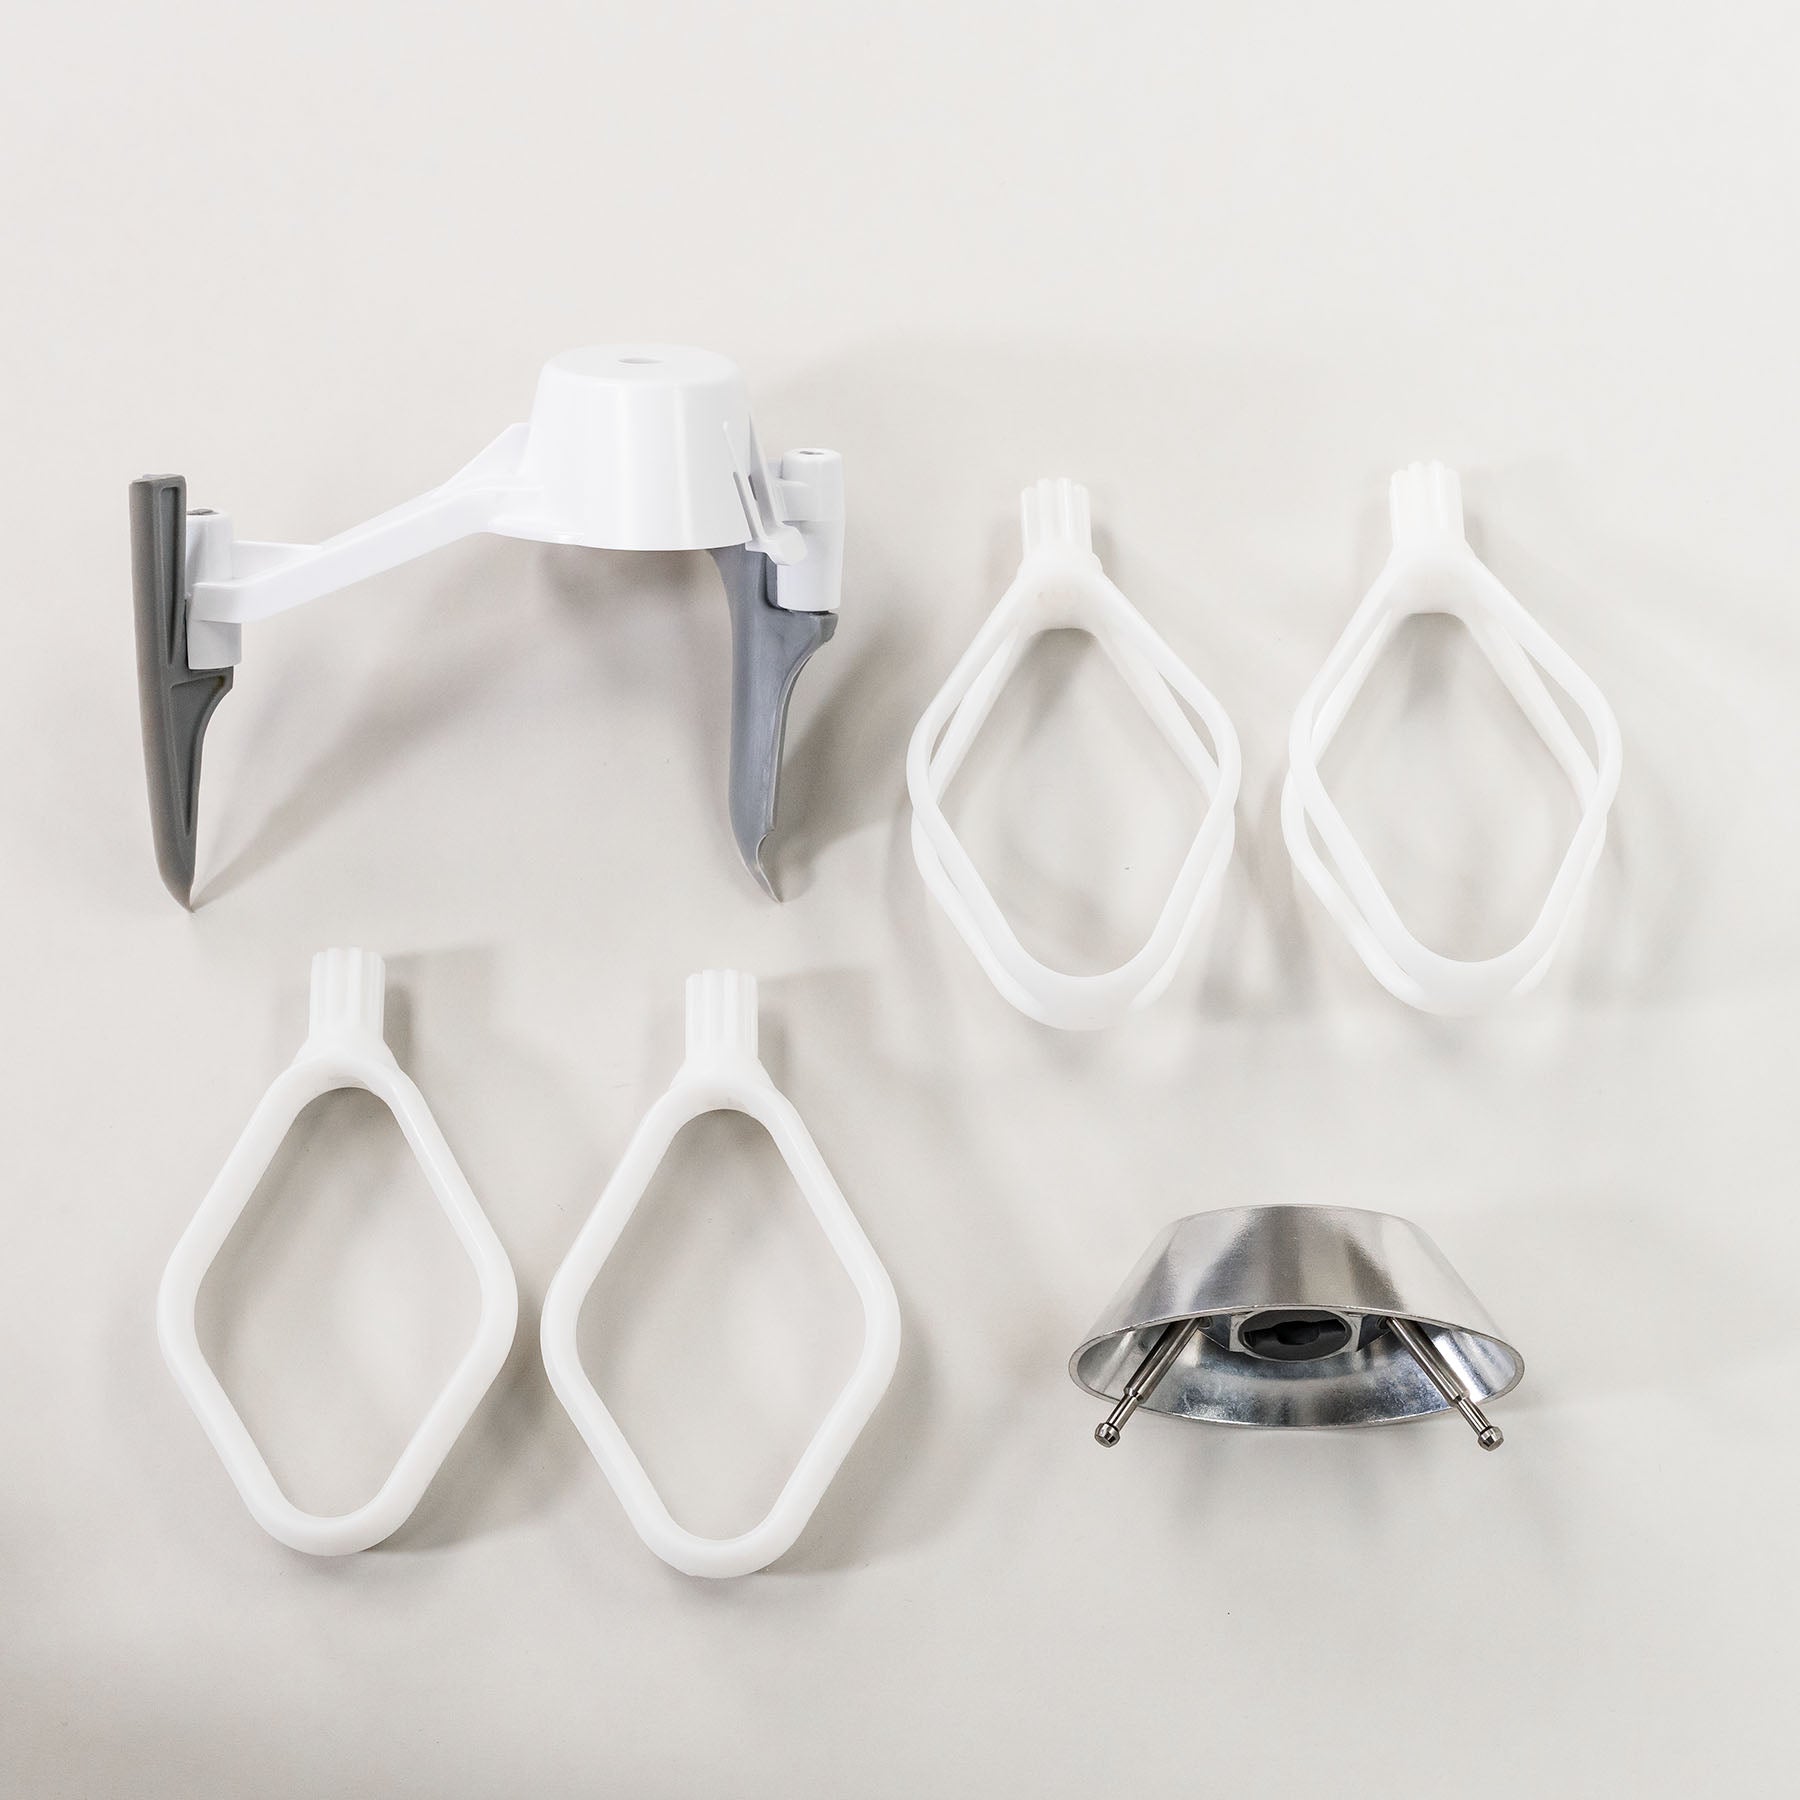 Explore Bosch Universal Slicer Shredder Attachment - Discontinued